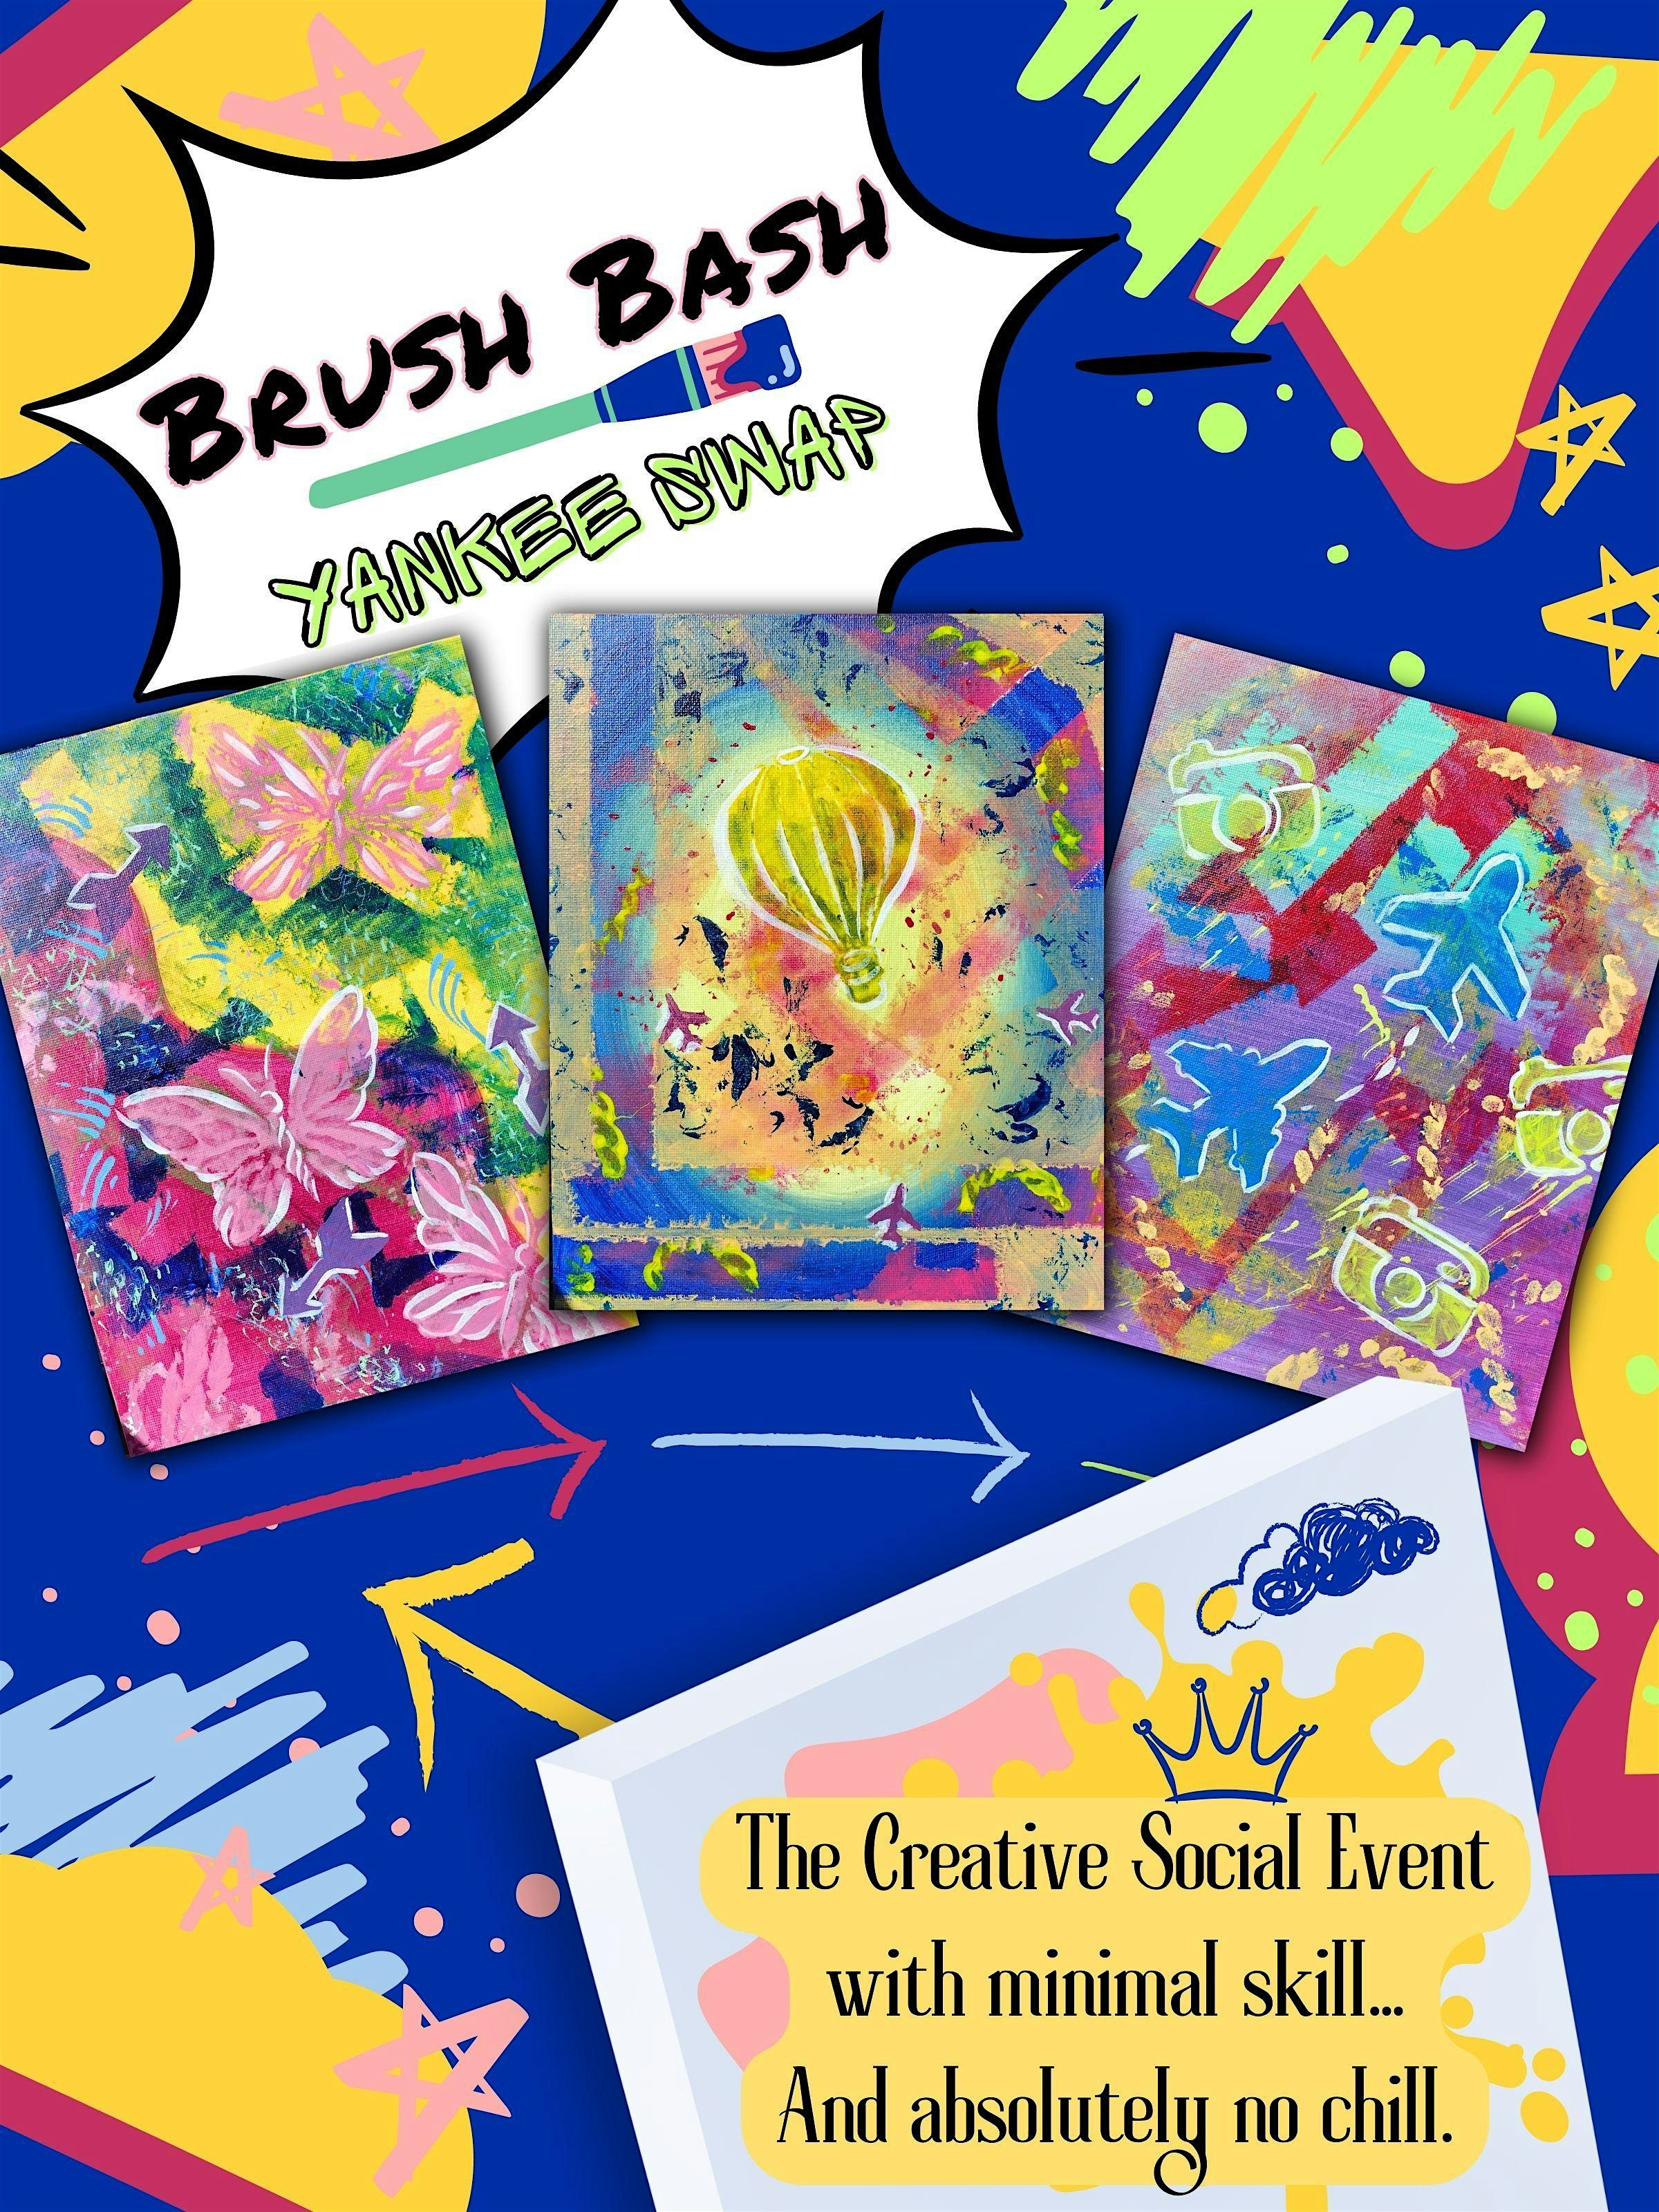 Brush Bash Yankee Swap: The Creative Social Event with an Improv Twist